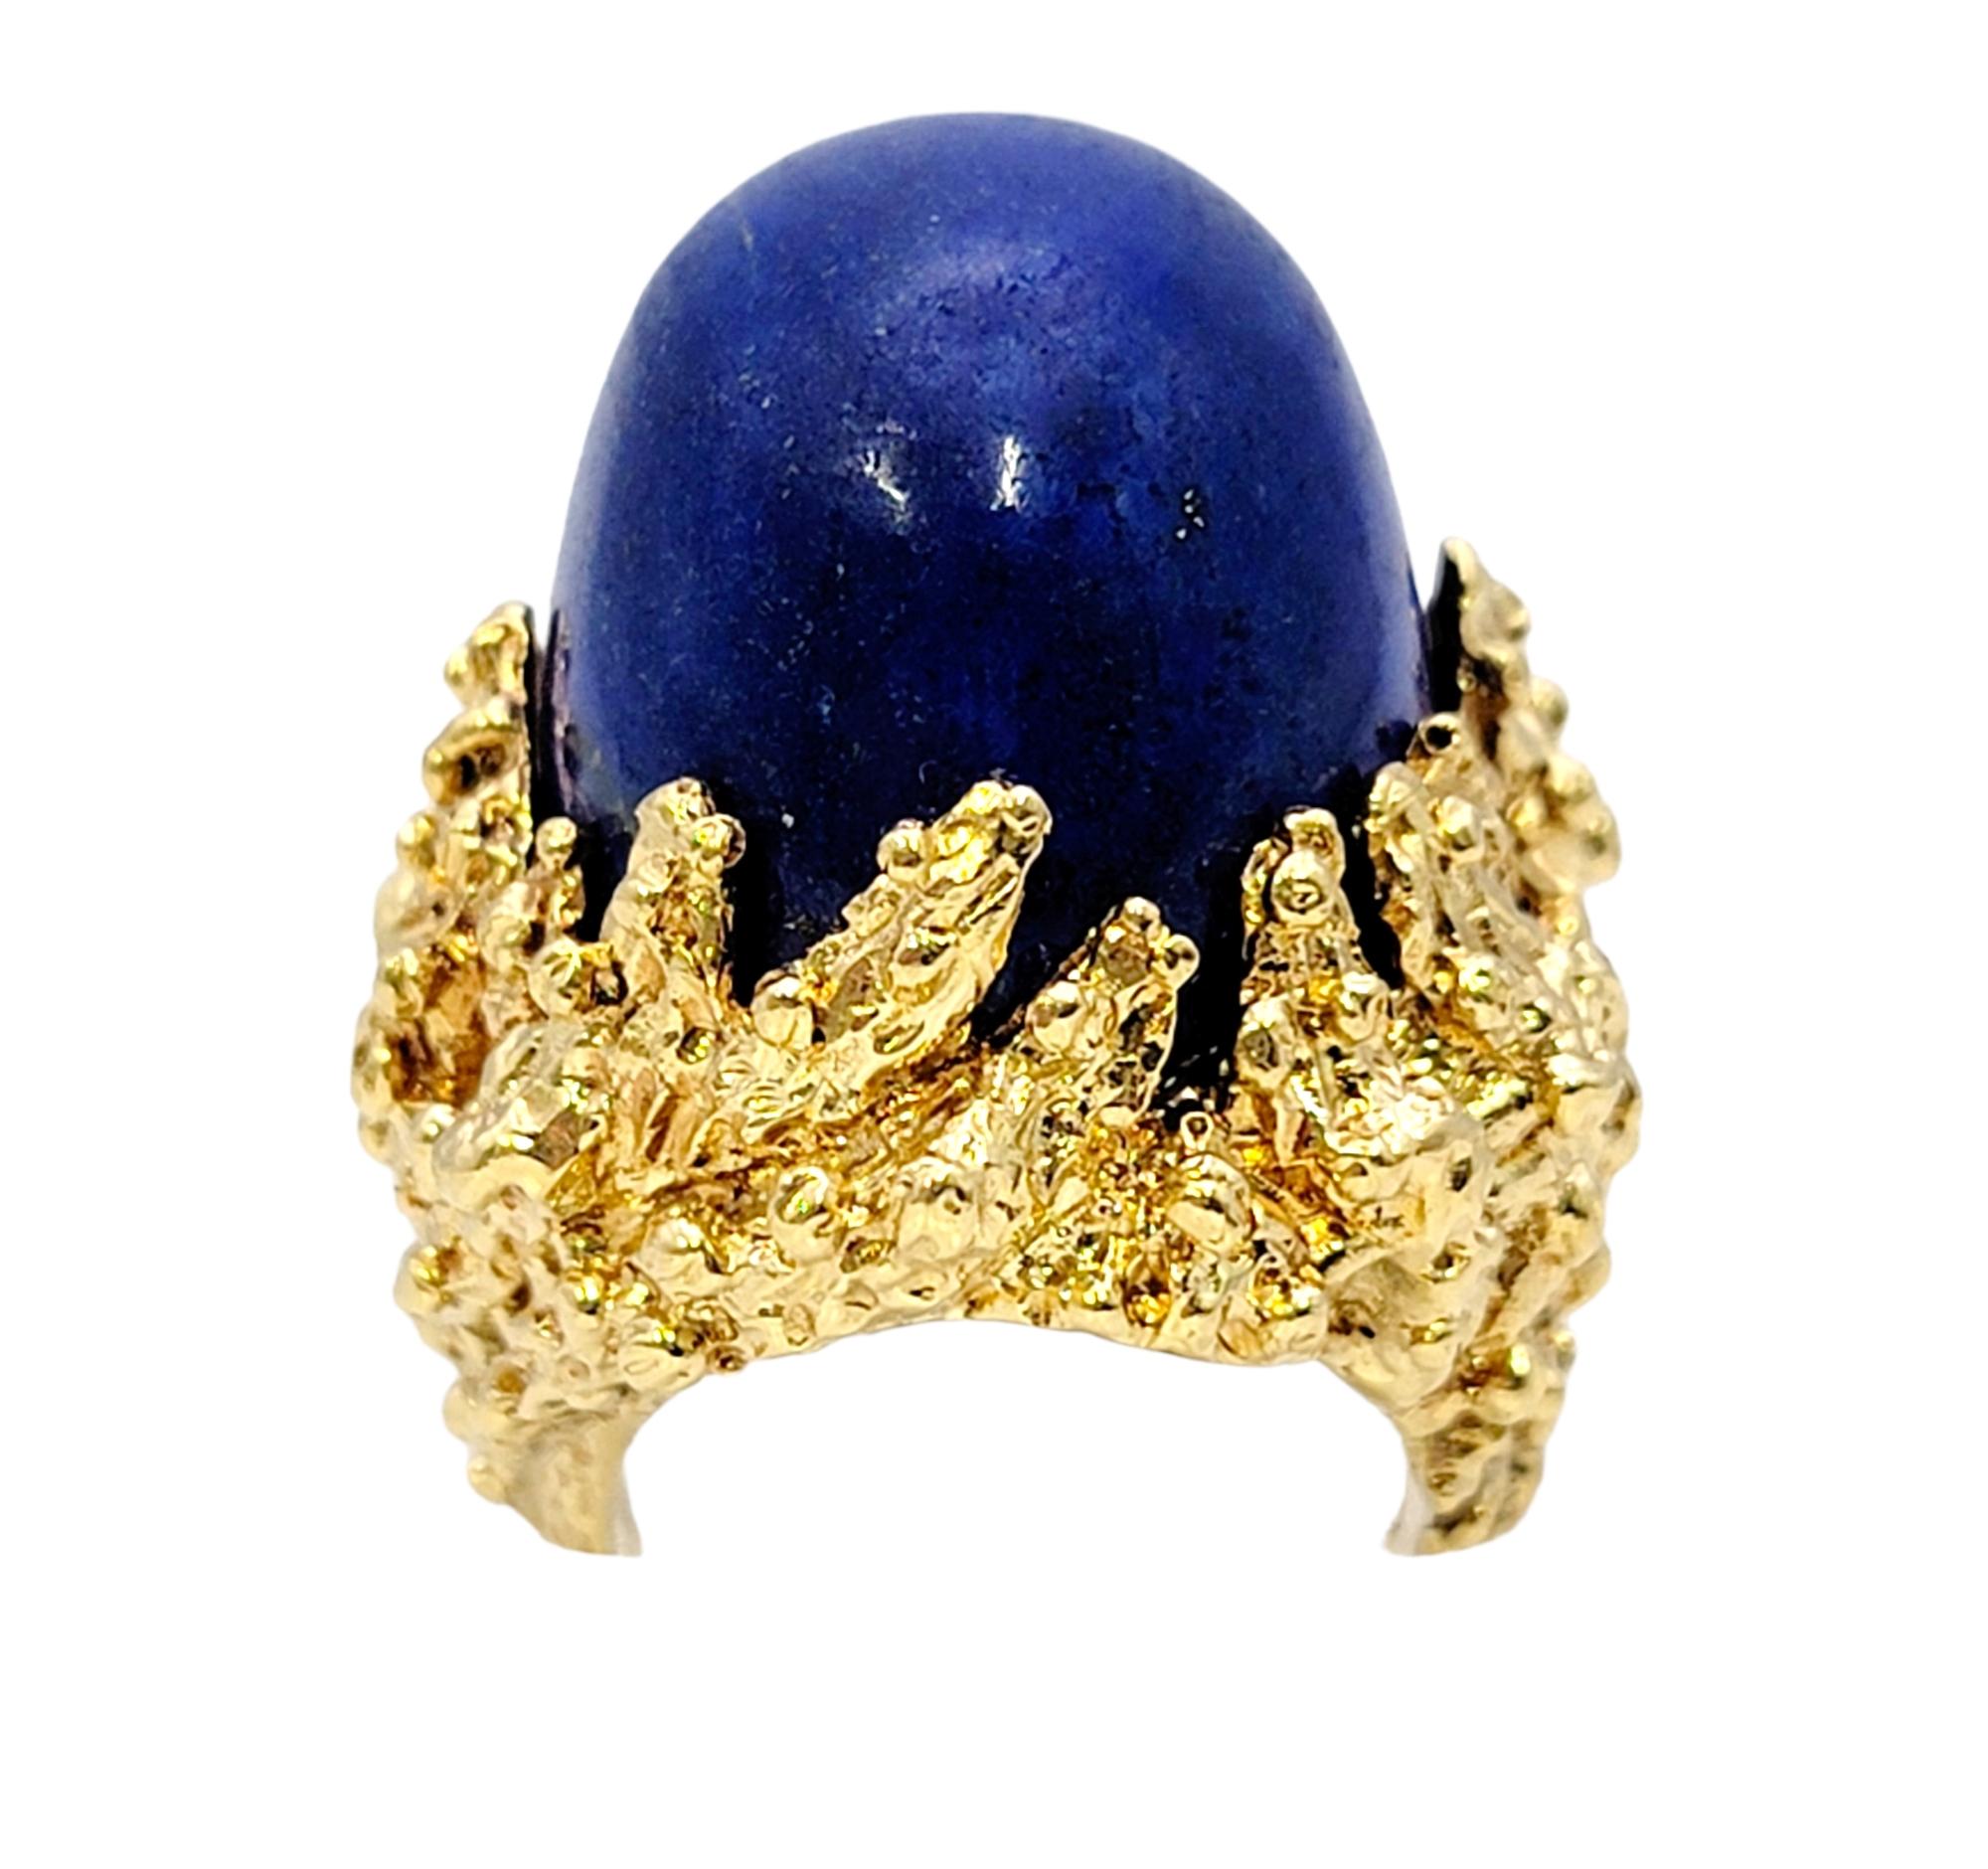 48.90 Carat Oval Cabochon Lapis Lazuli Coral Motif 18 Karat Gold Cocktail Ring 2